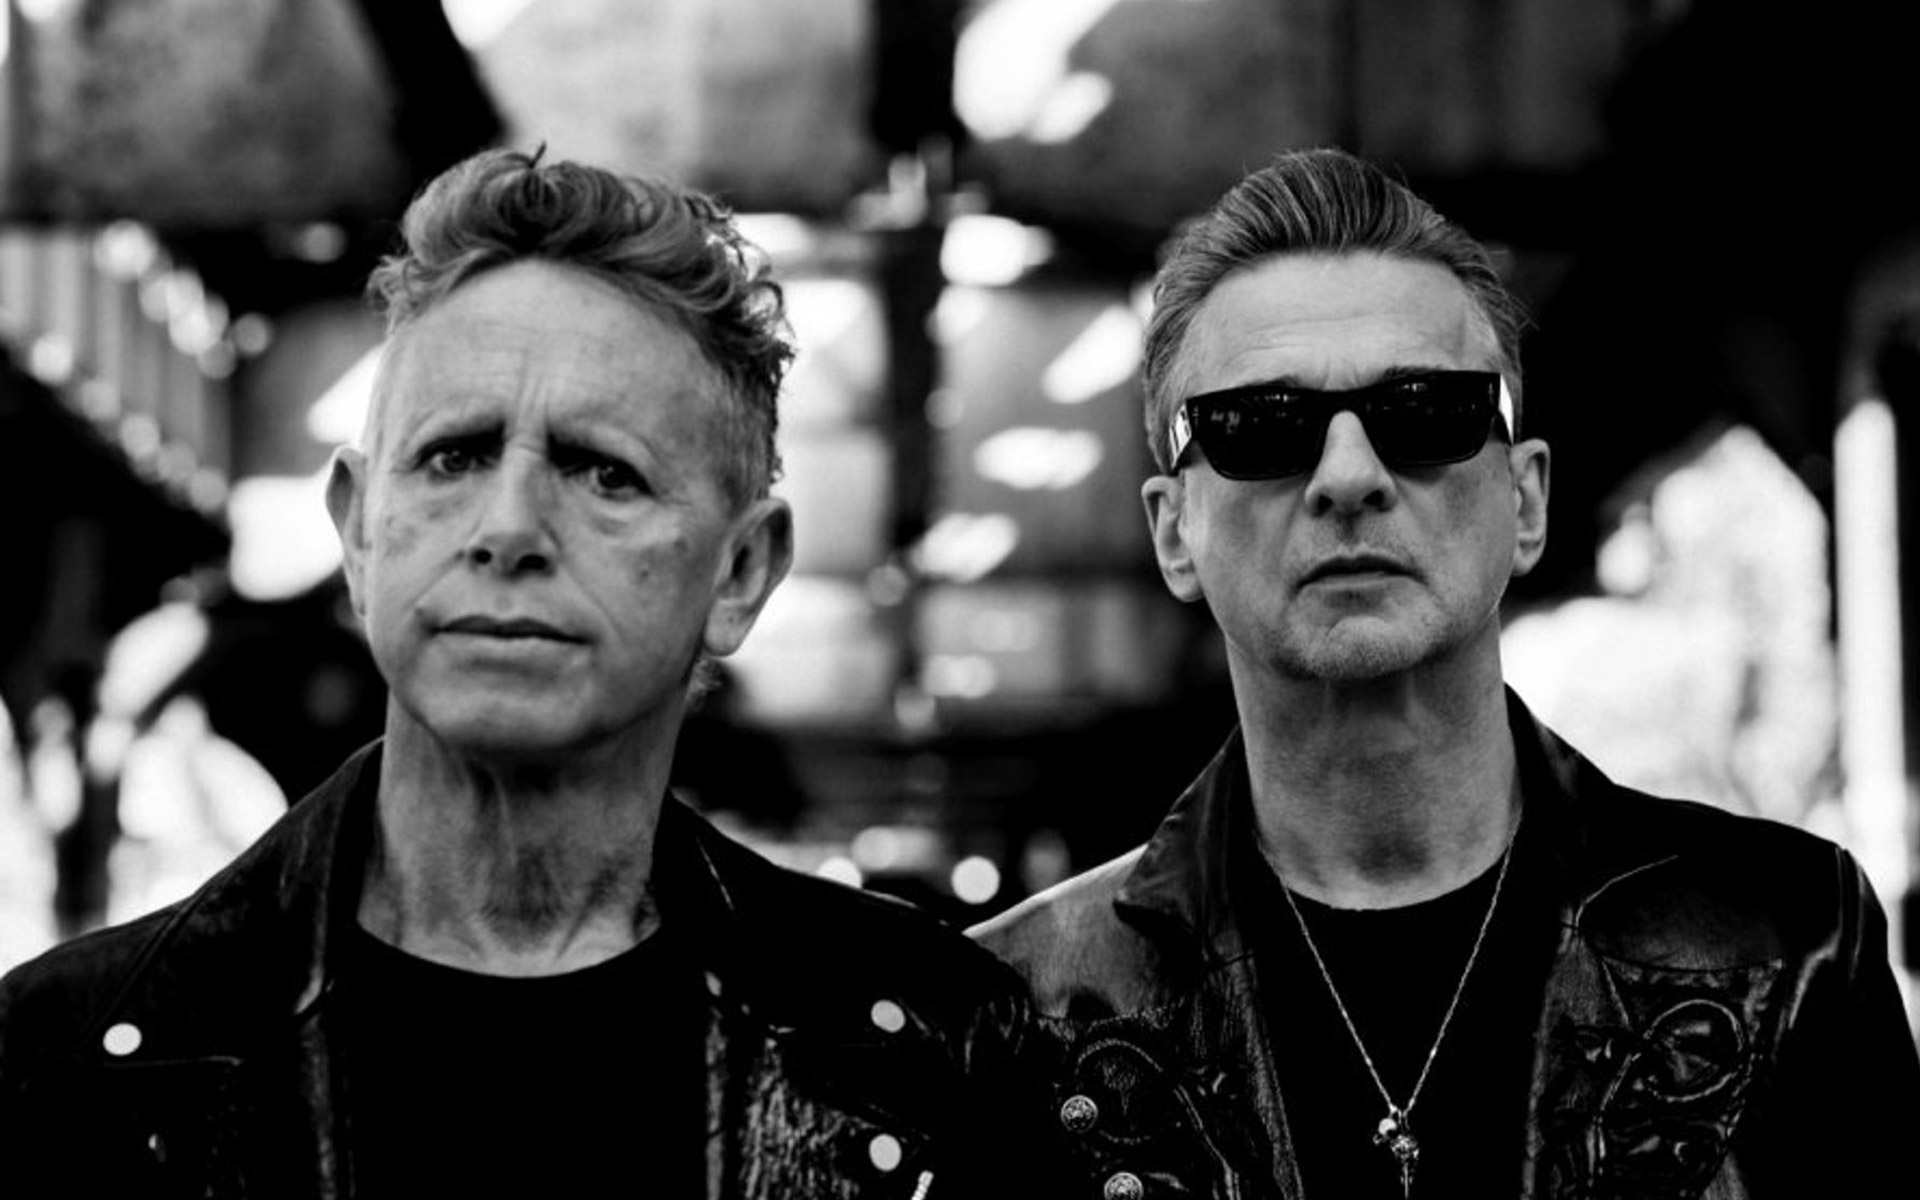 UNBOXED: Depeche Mode Memento Mori Exclusive Deluxe Edition 